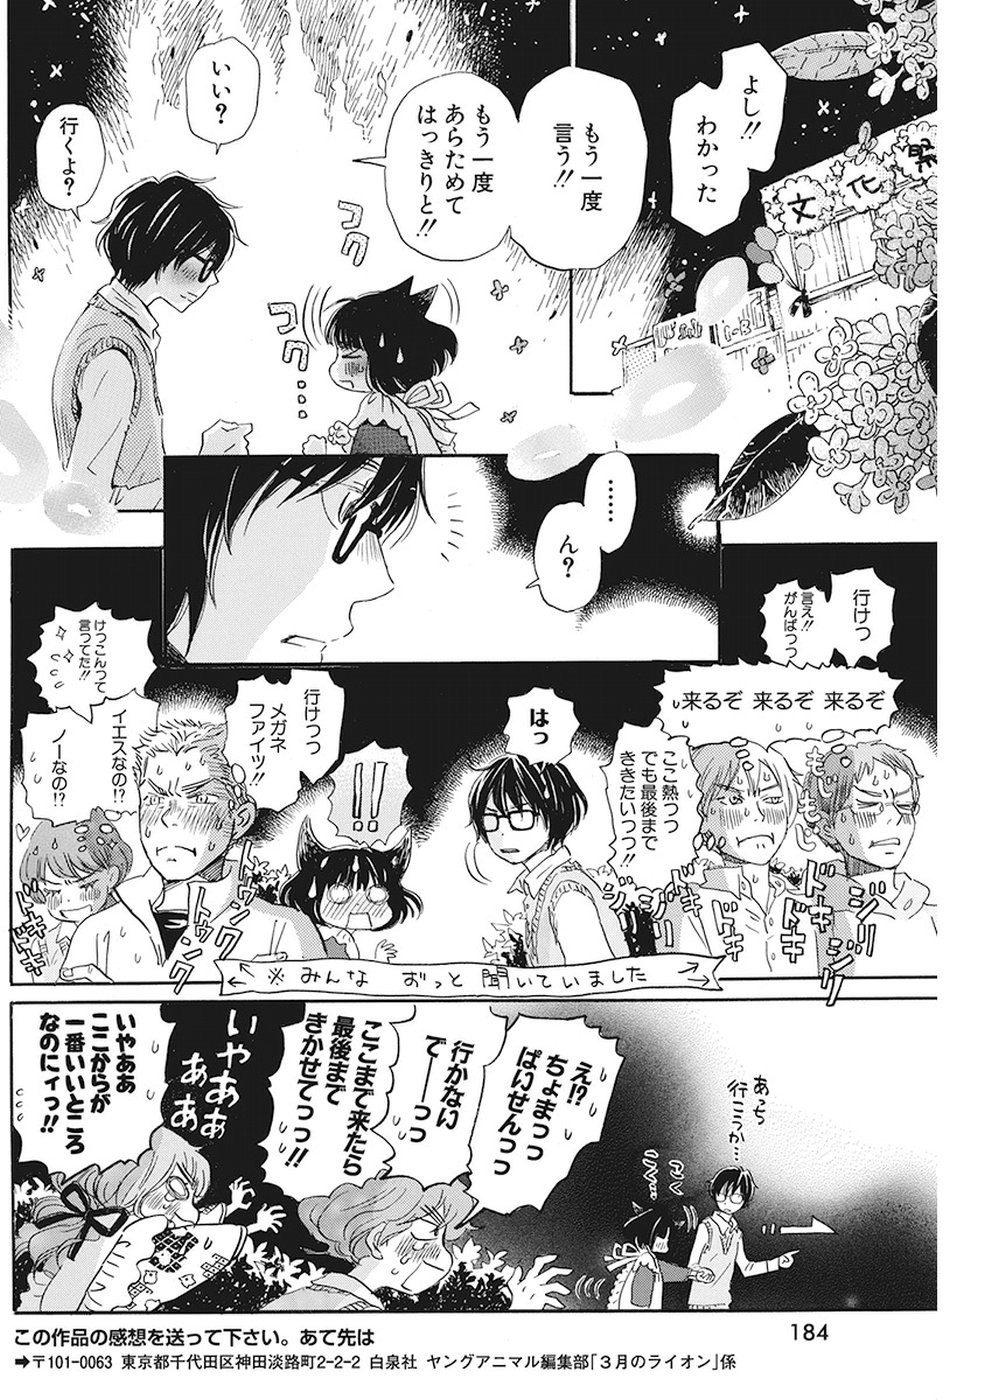 3 Gatsu no Lion - Chapter 155 - Page 10